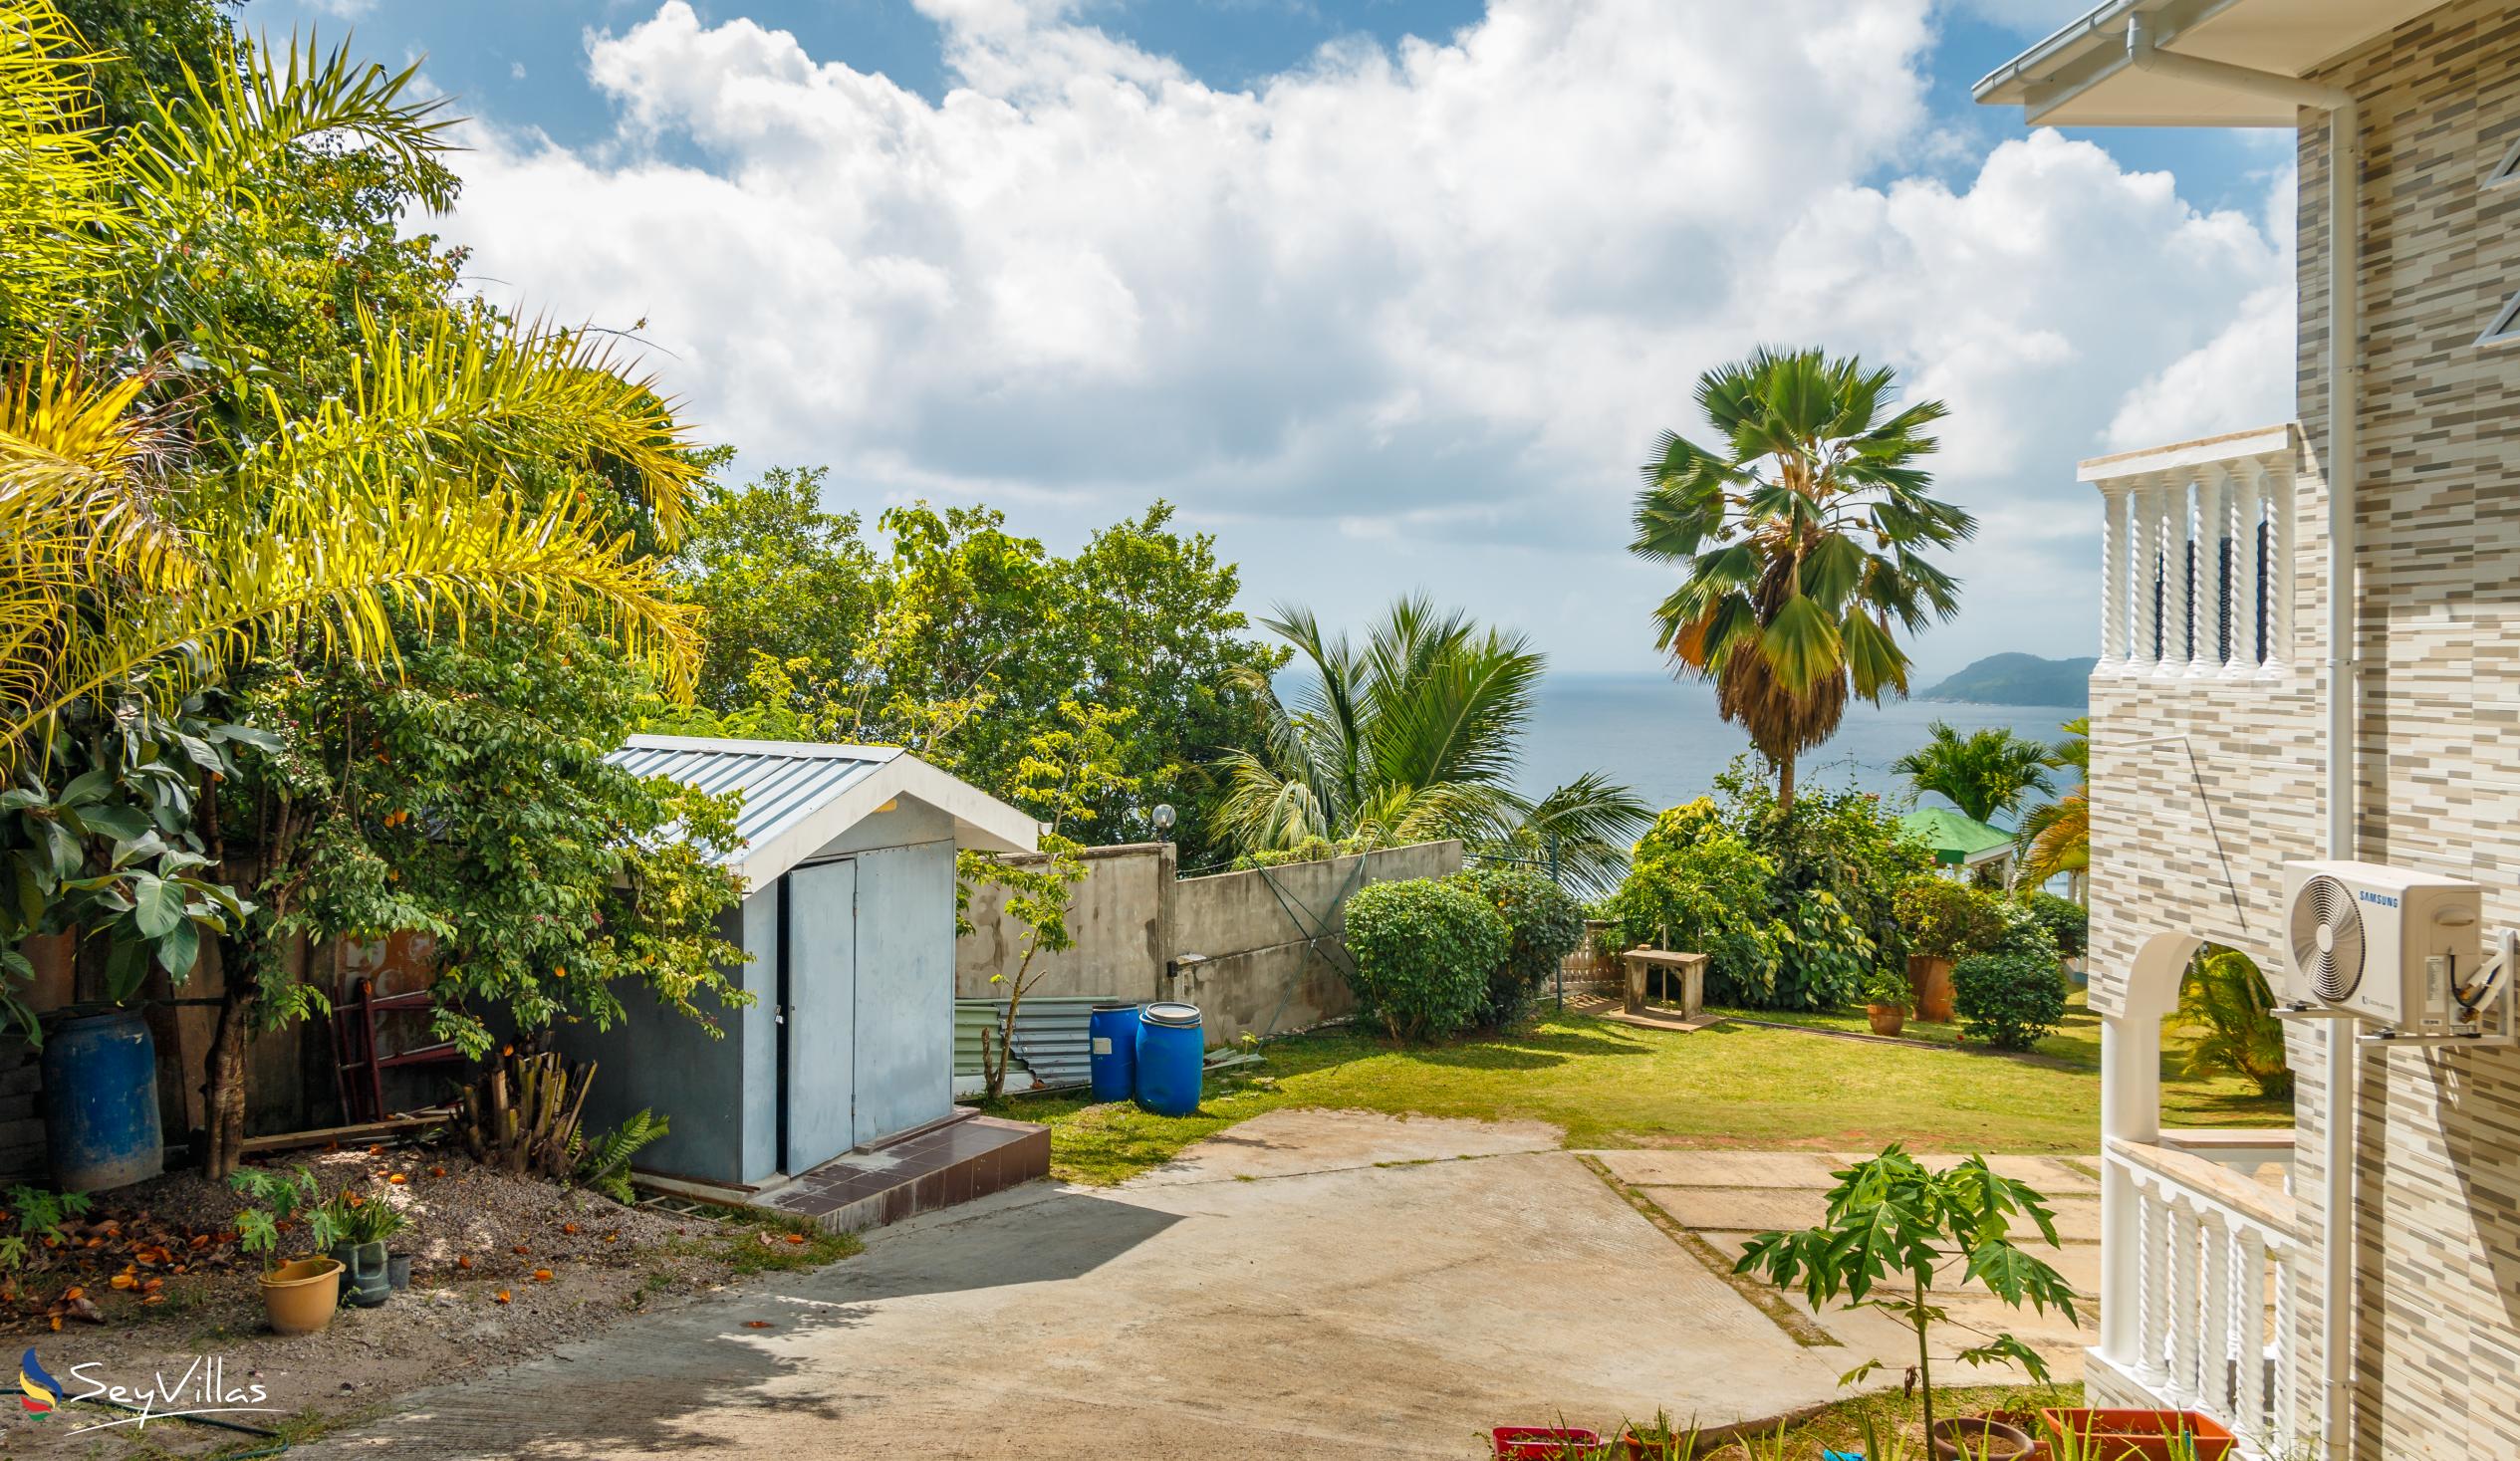 Foto 17: Villa Bel Age - Aussenbereich - Mahé (Seychellen)